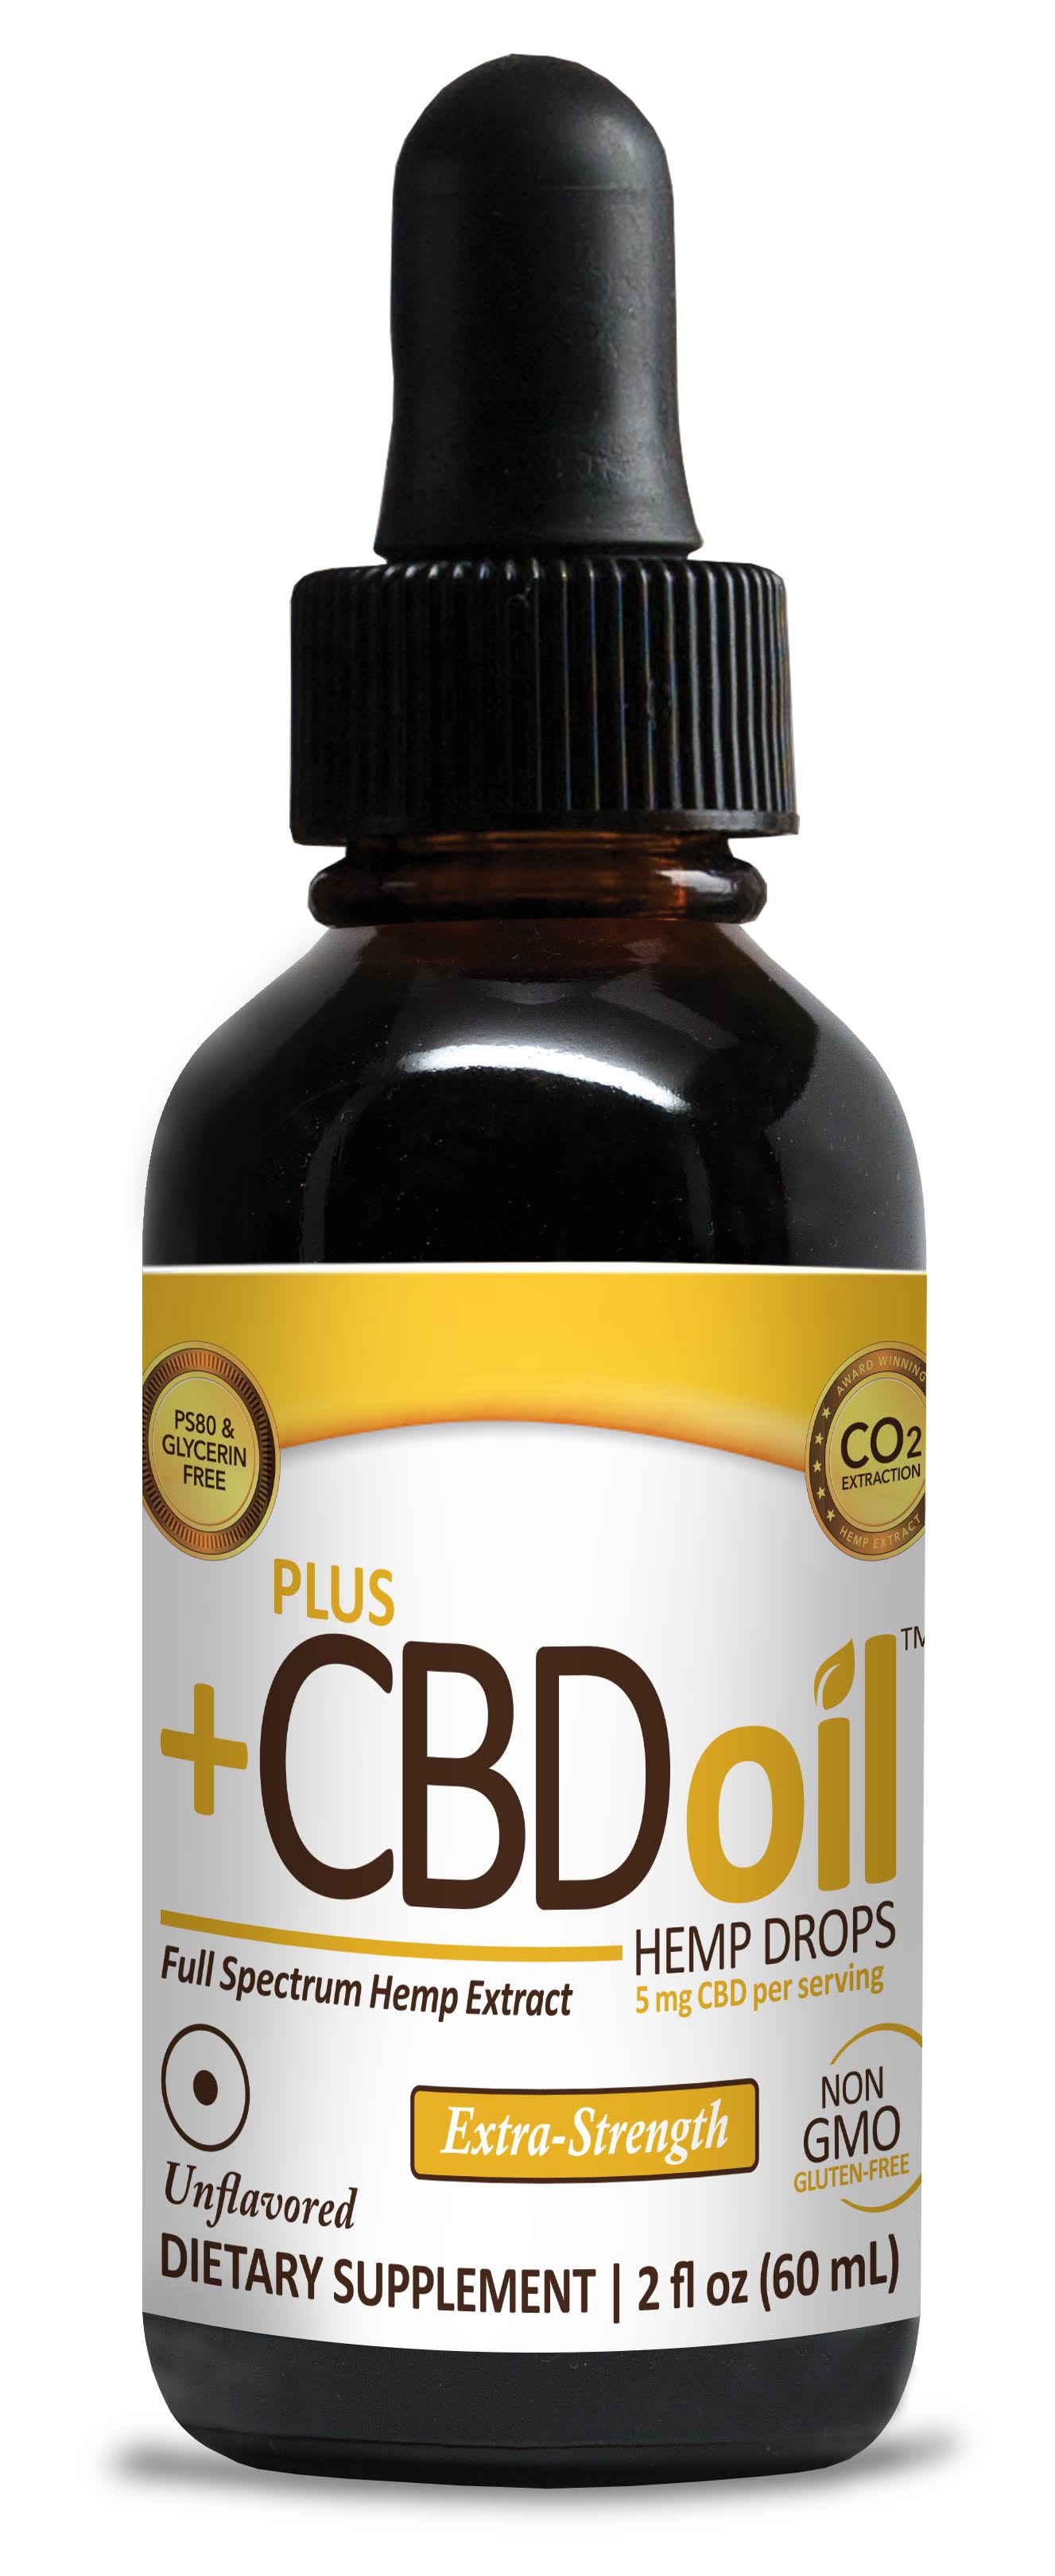 Plus +CBD Oil Gold Formula Drops - Unflavored, 2 fl oz